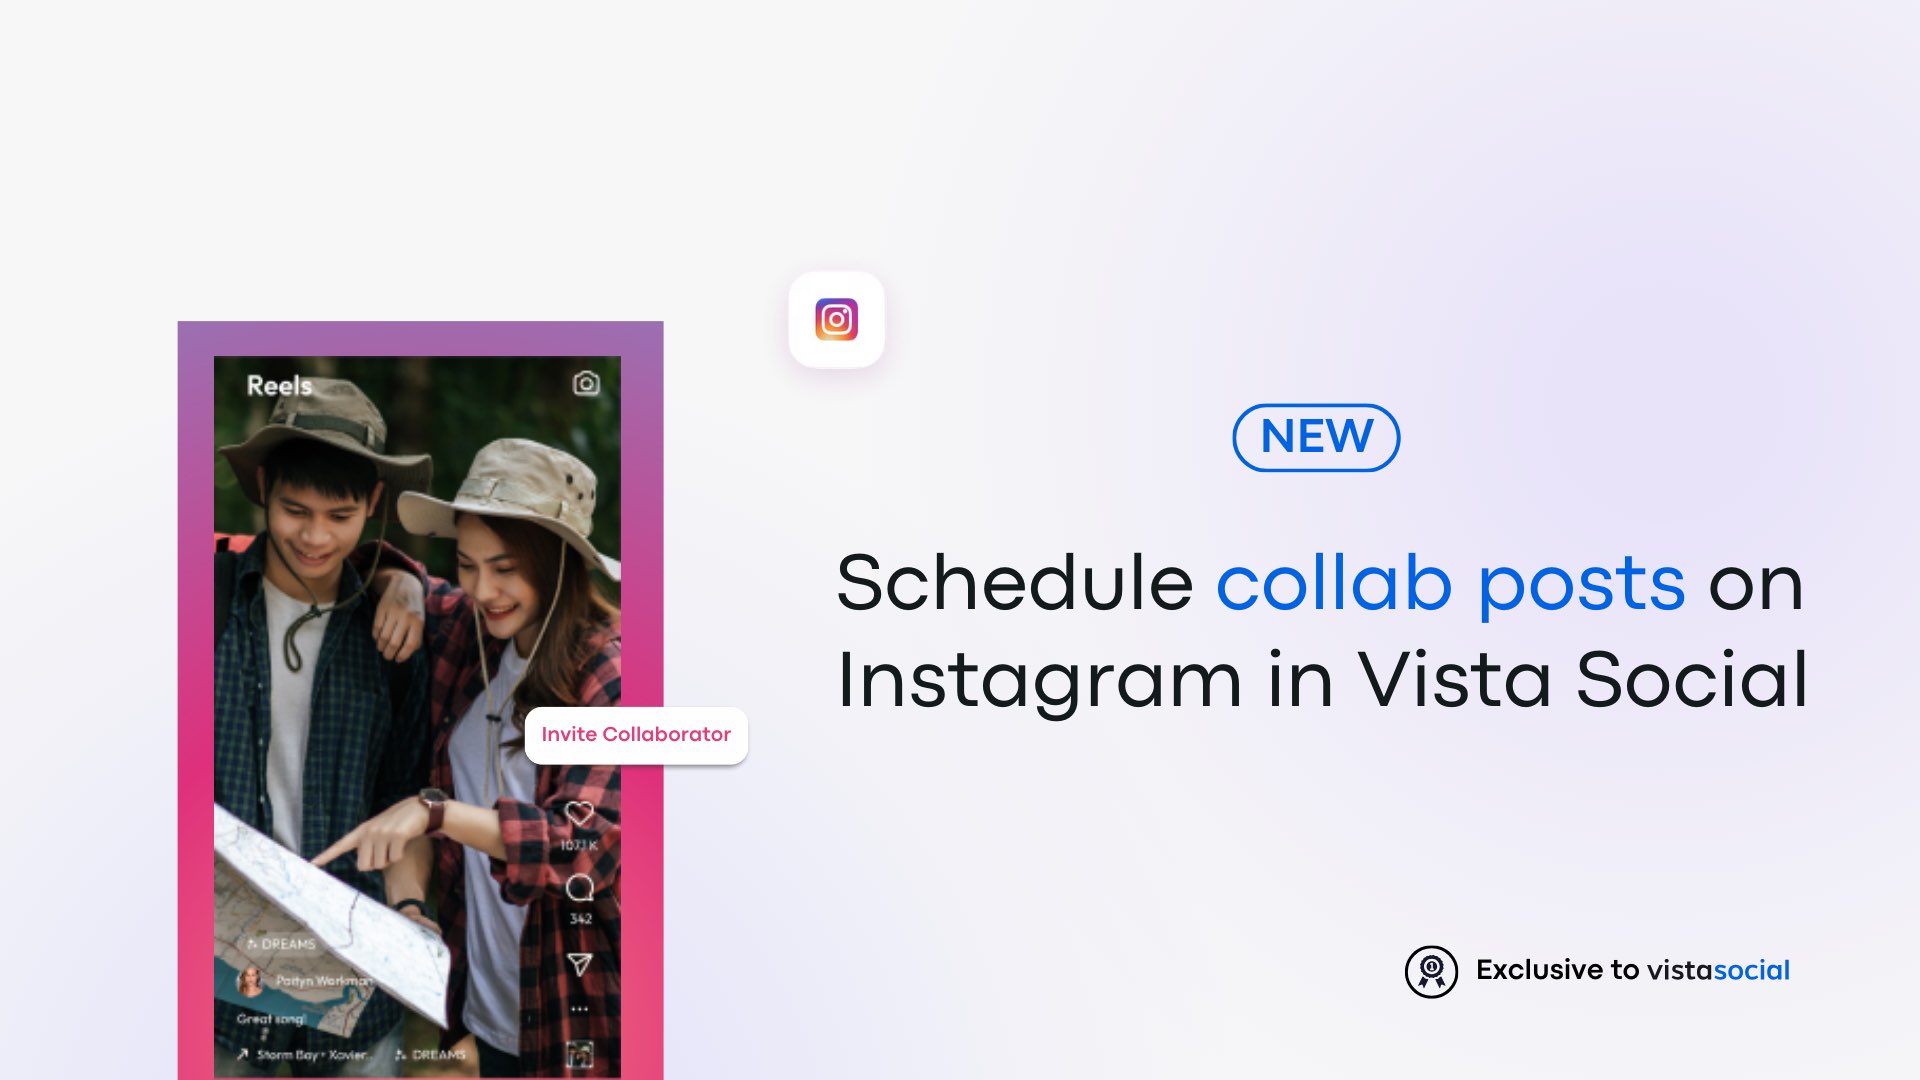 Schedule collab posts on Instagram in Vista Social - 4